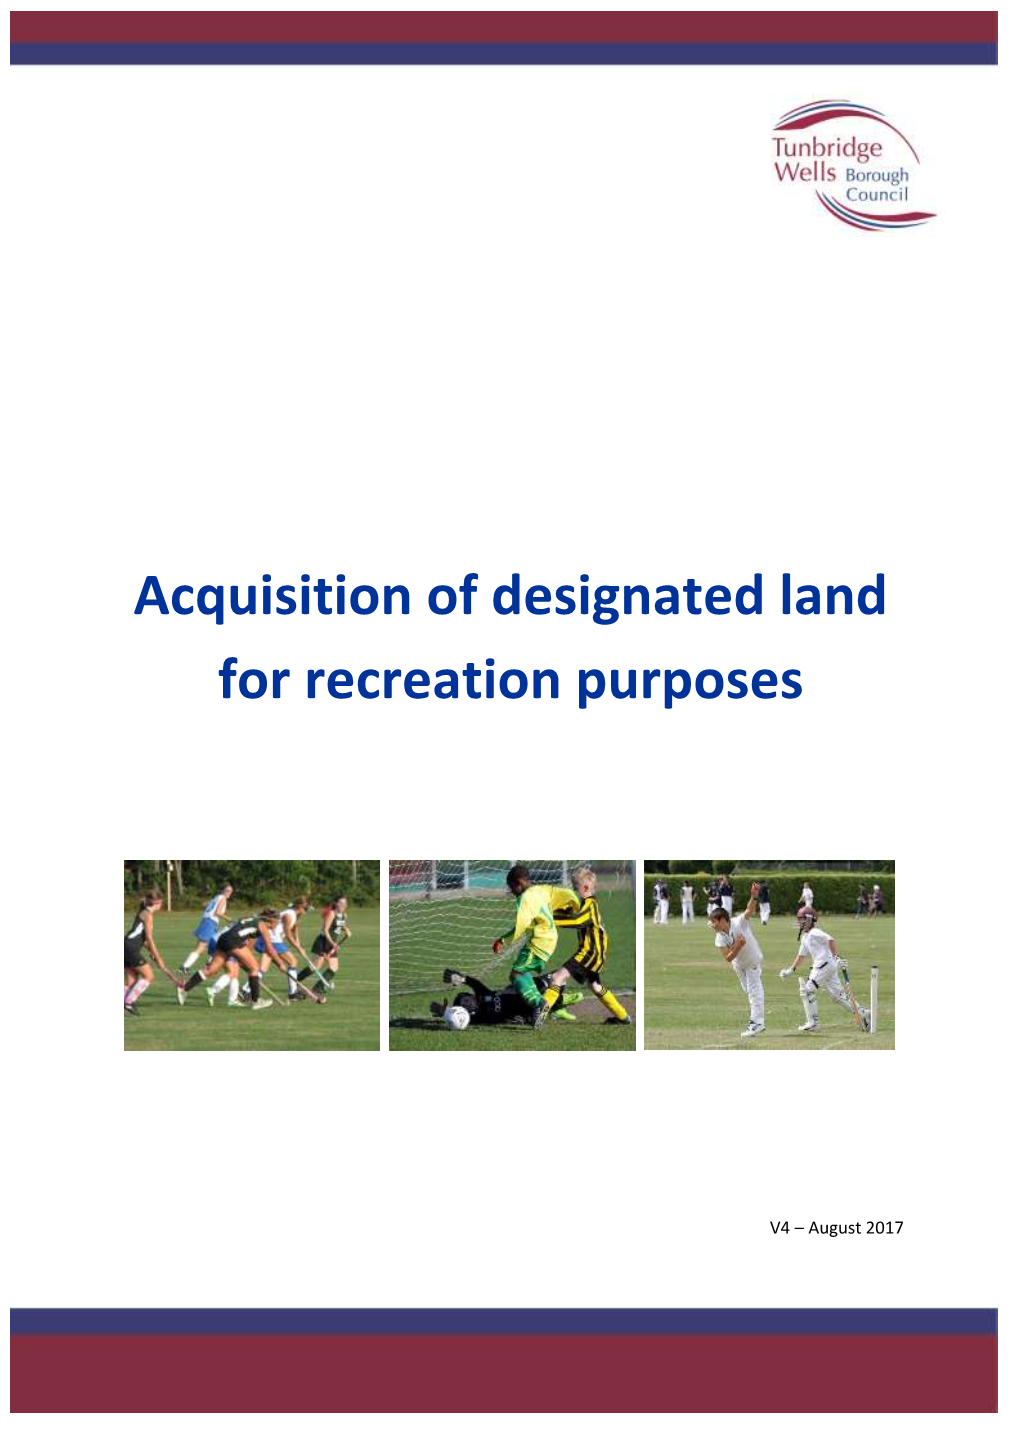 Acquisition of Designated Land for Recreation Purposes